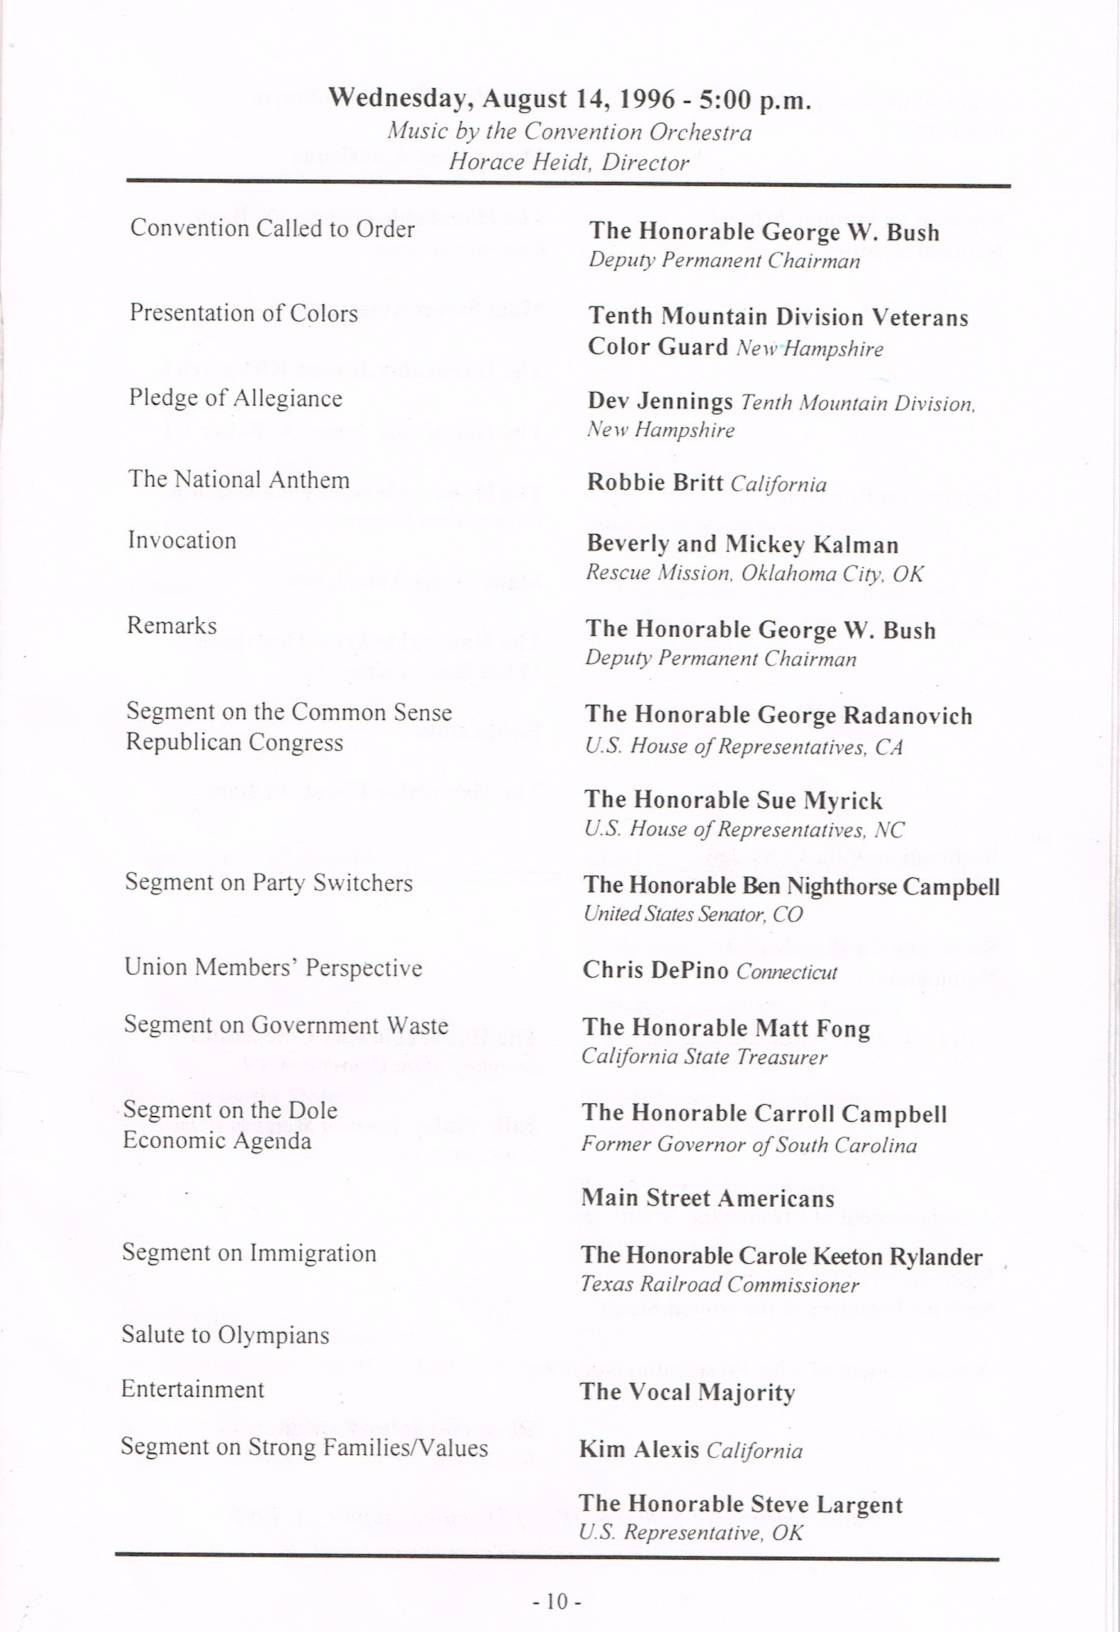 1996 RNC agenda